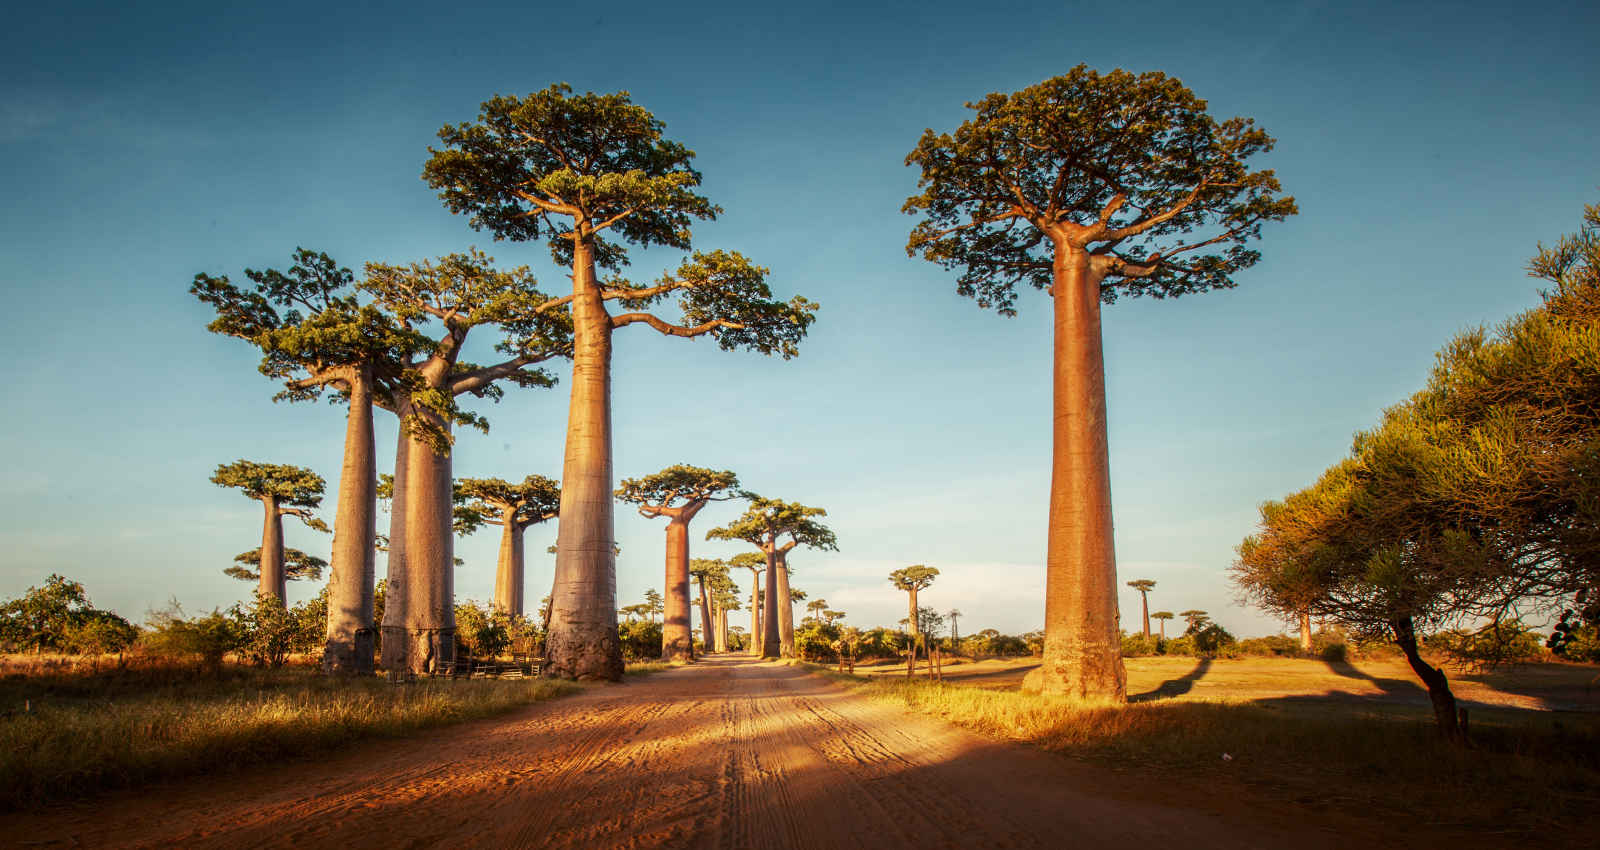 Aventure à Madagascar